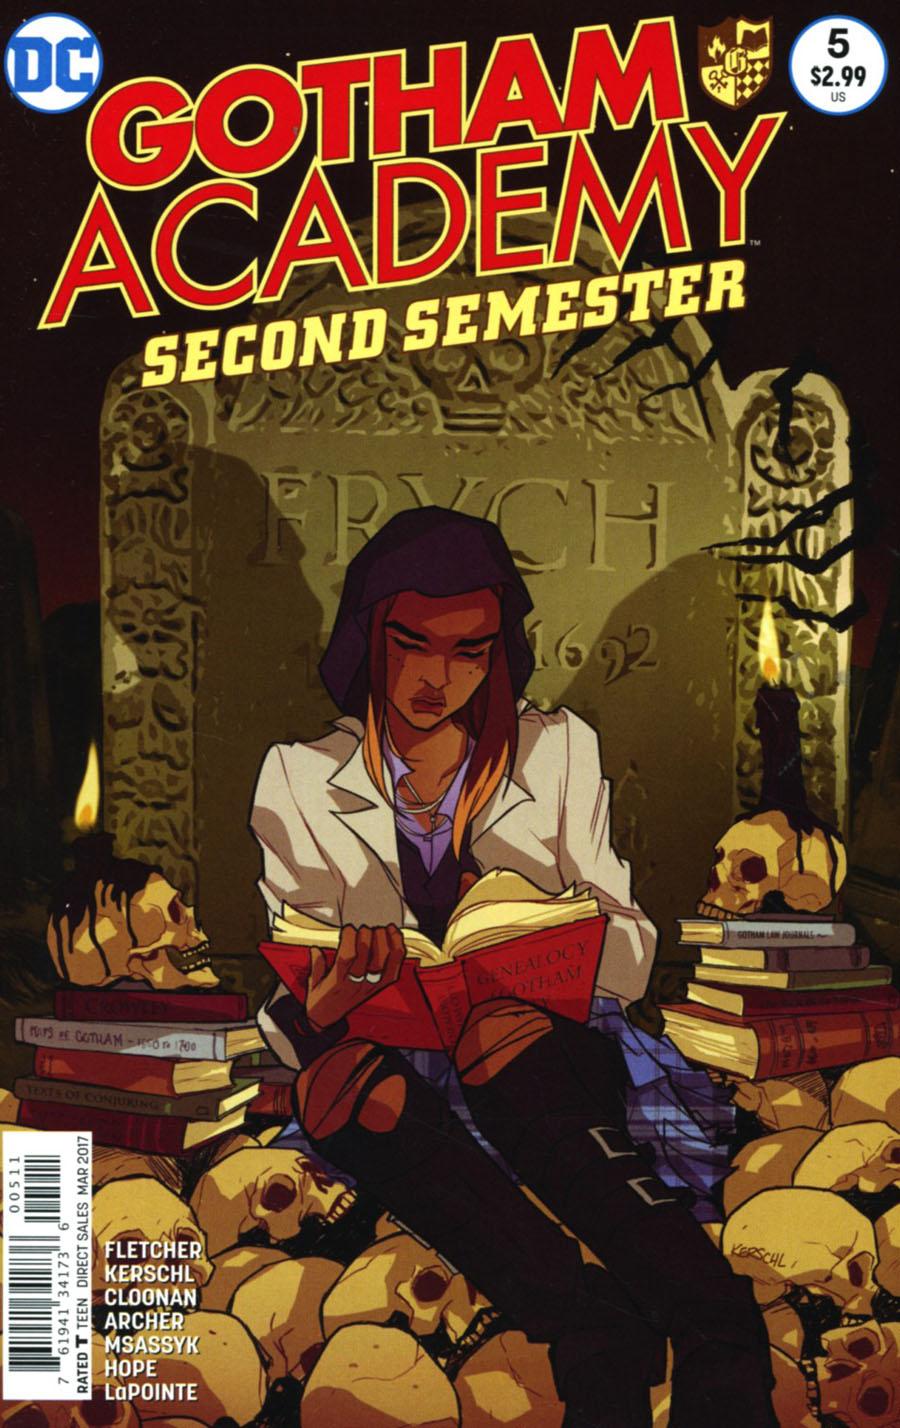 Gotham Academy Second Semester Vol. 1 #5